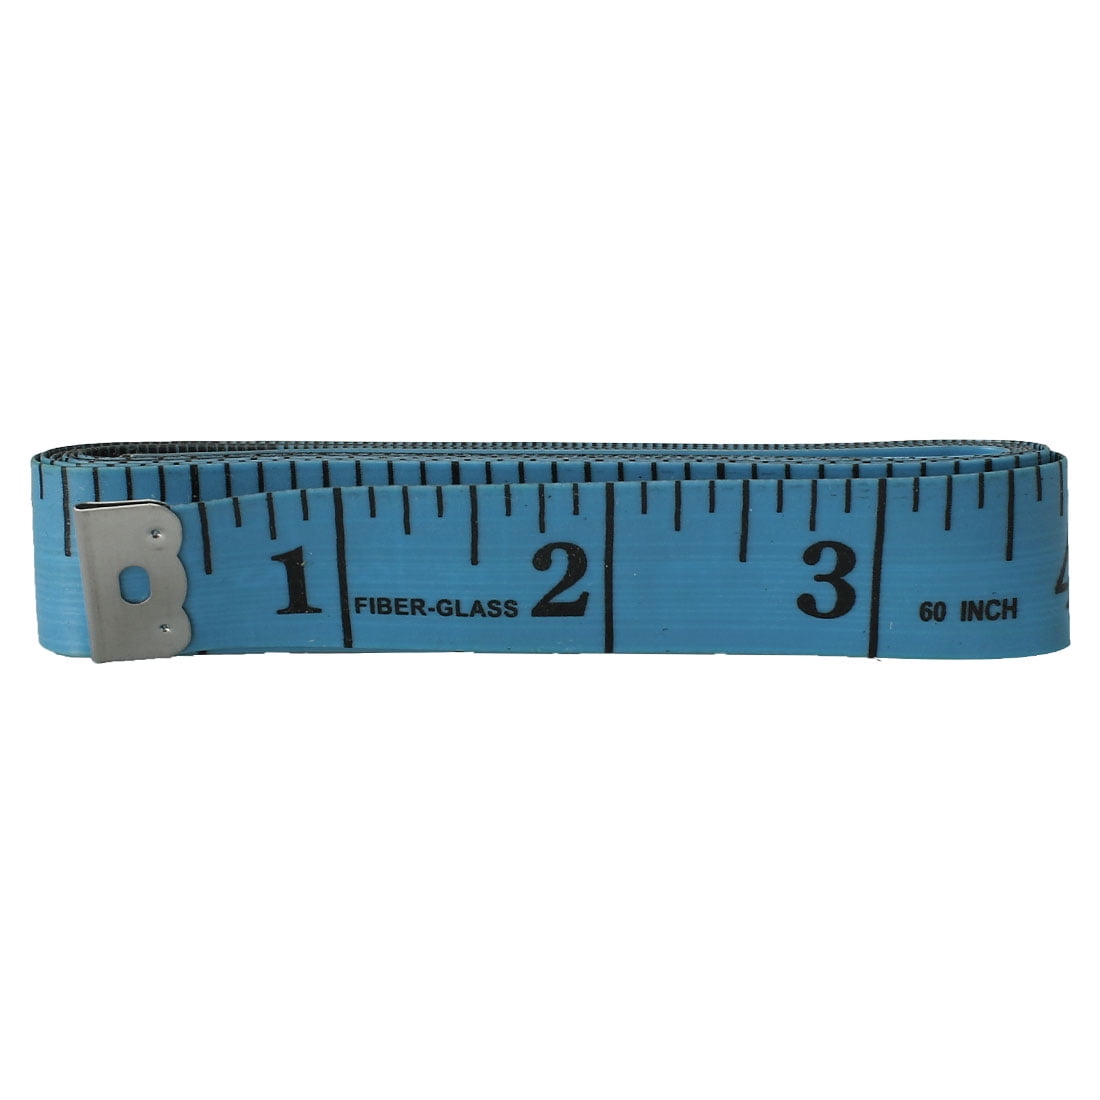 Durable Soft 3 Meter 300 Cm Mini Sewing Tailor Tape Body Measuring Measure  Ruler Dressmaking Pvc Plastic Clothing Measuring - Tape Measures -  AliExpress